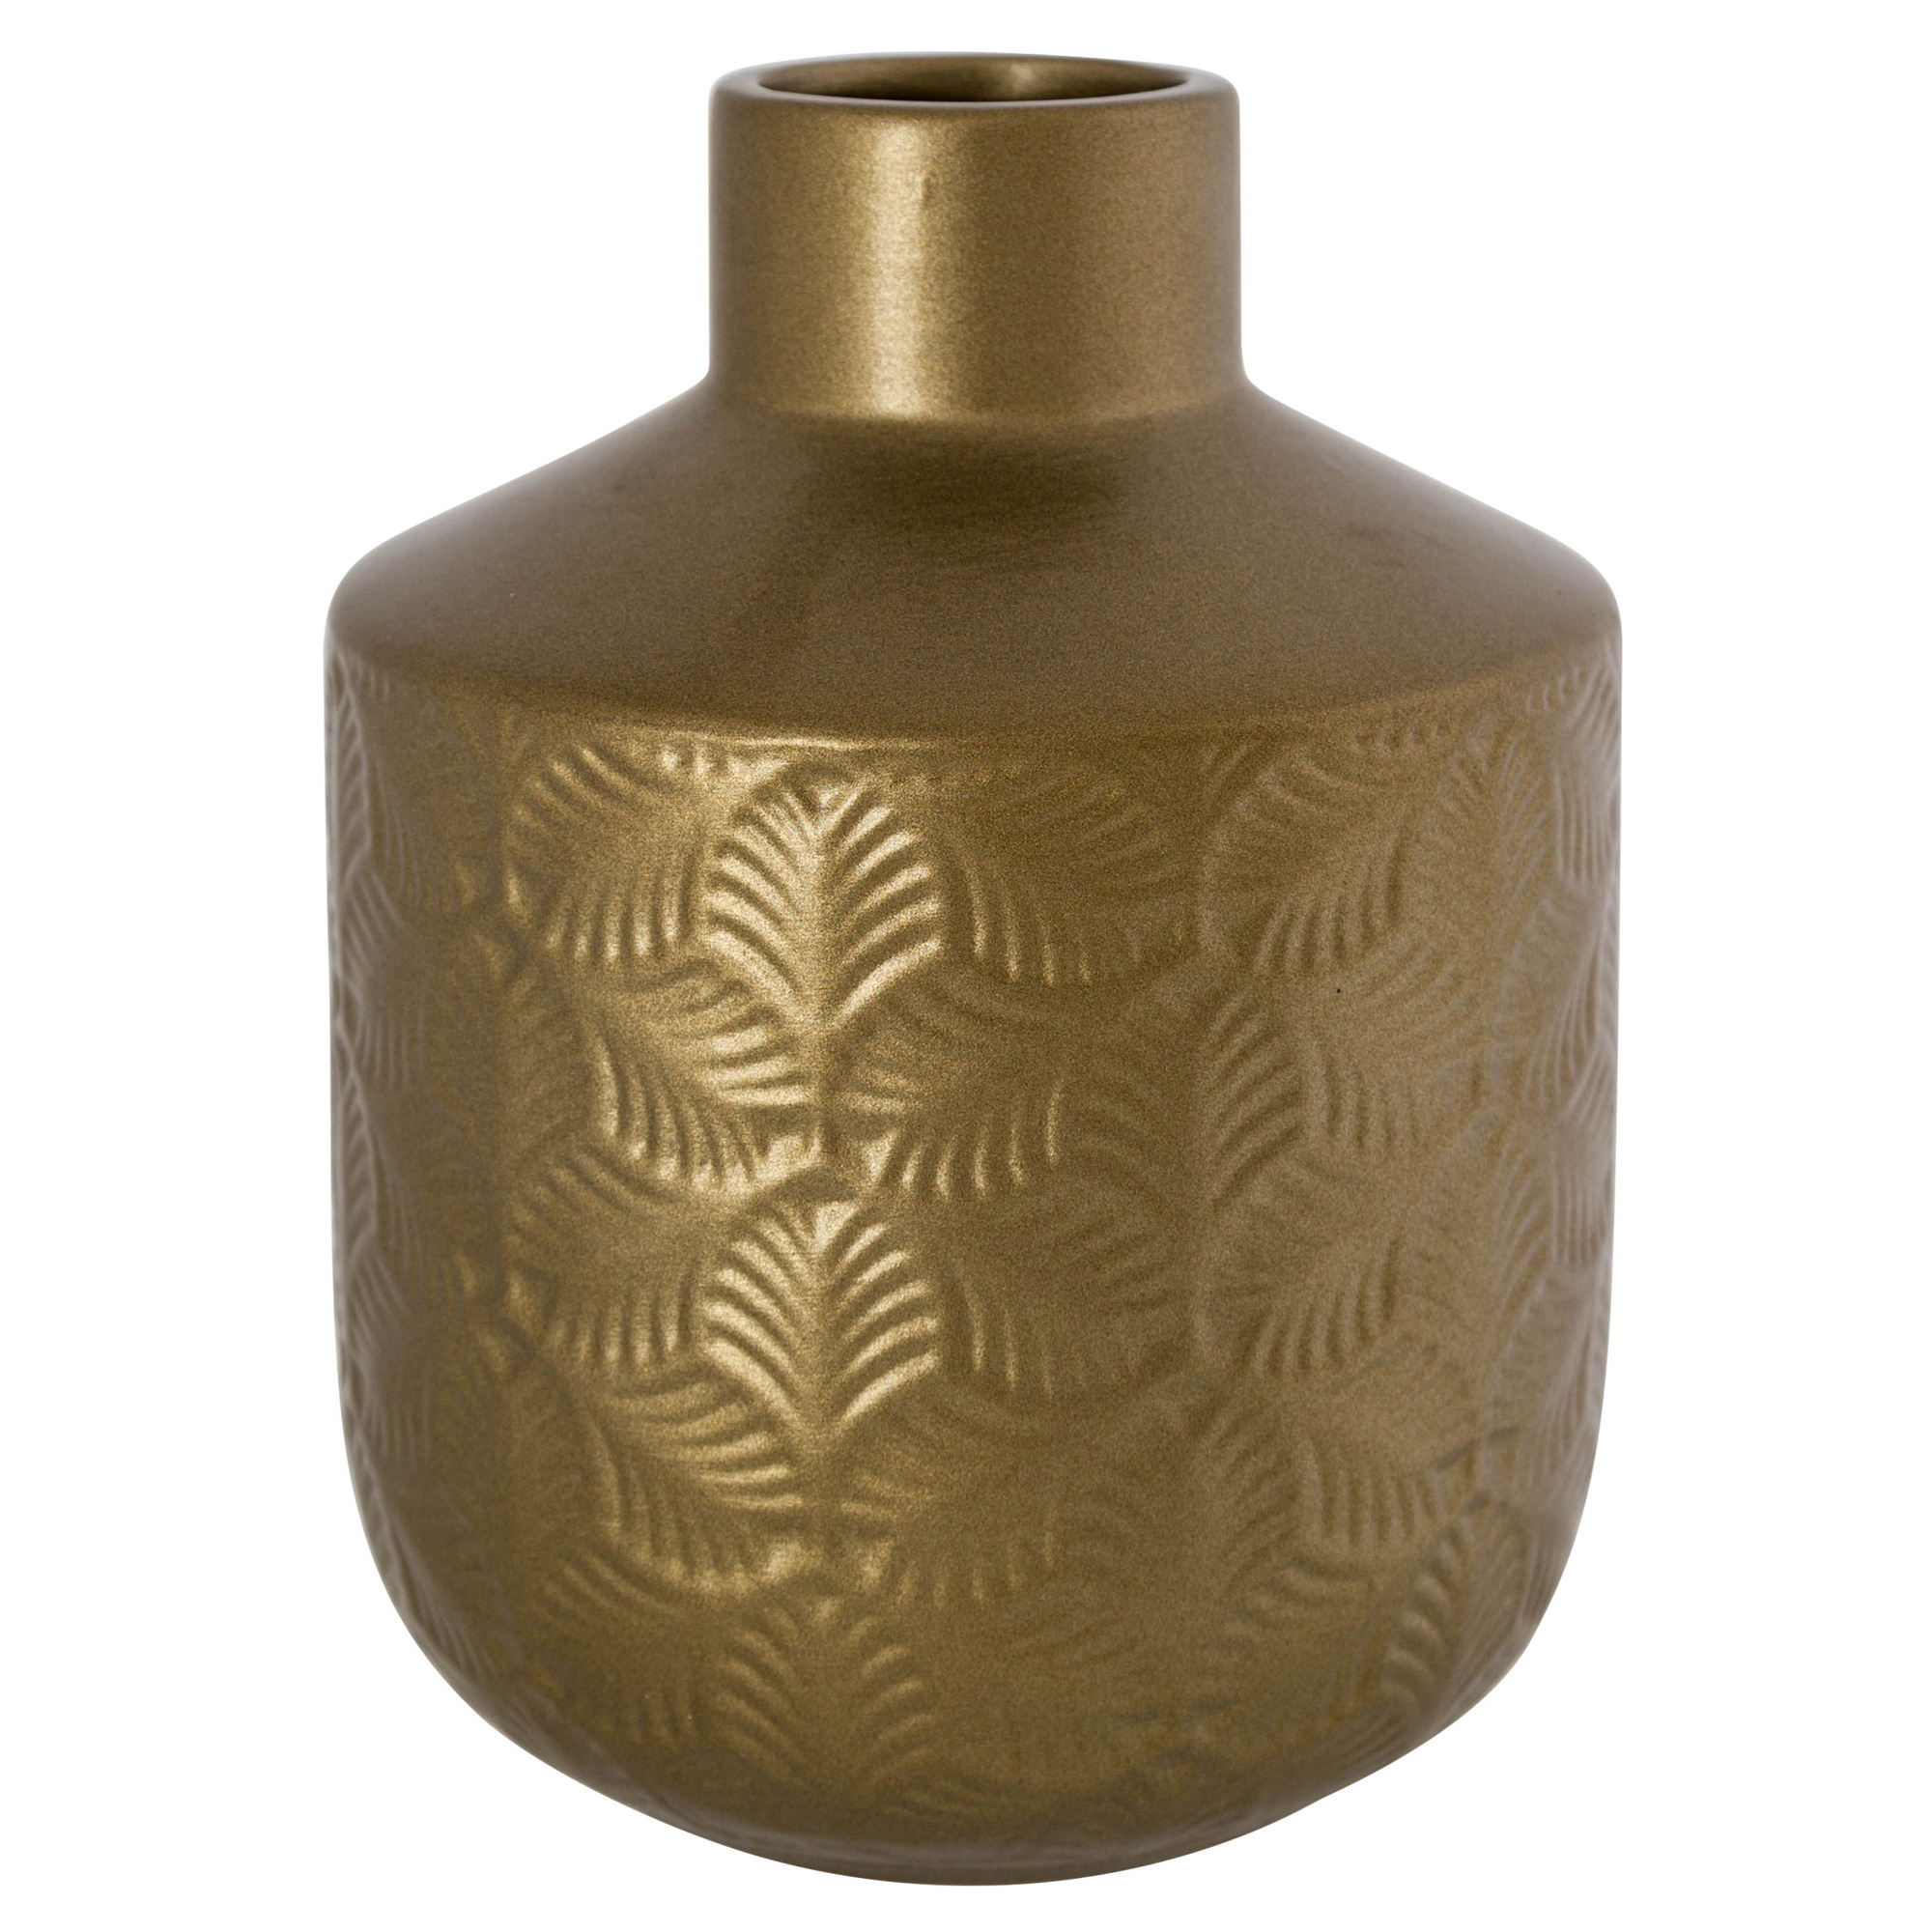 Bloemenvaas-vazen van brons kleur keramiek H20 x D15 cm